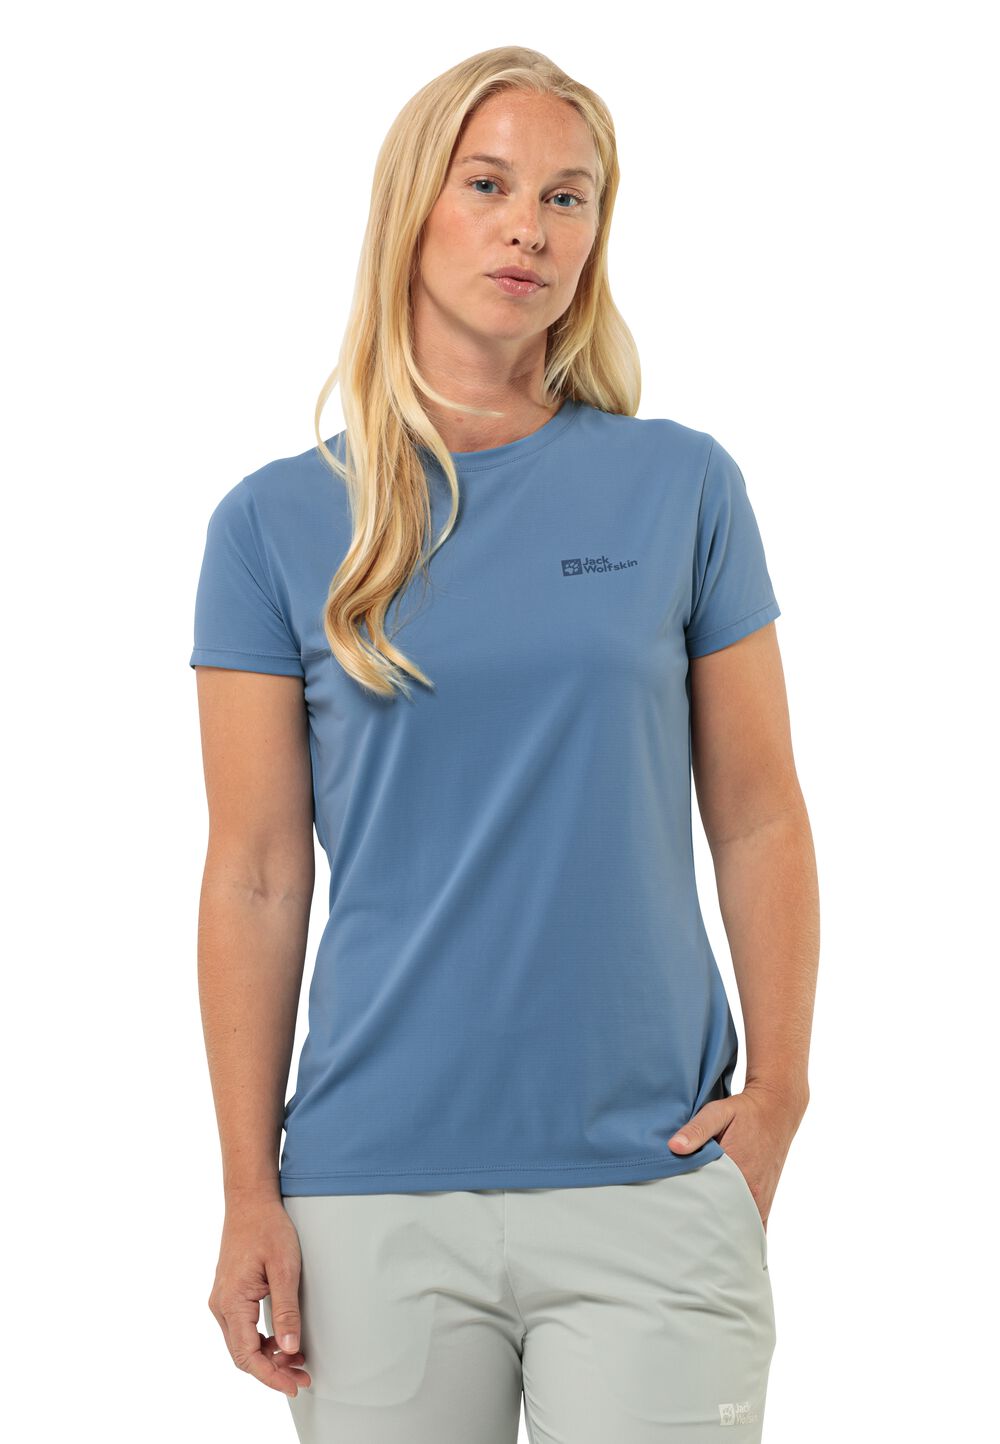 Jack Wolfskin Prelight Trail T-Shirt Women Functioneel shirt Dames S elemental blue elemental blue